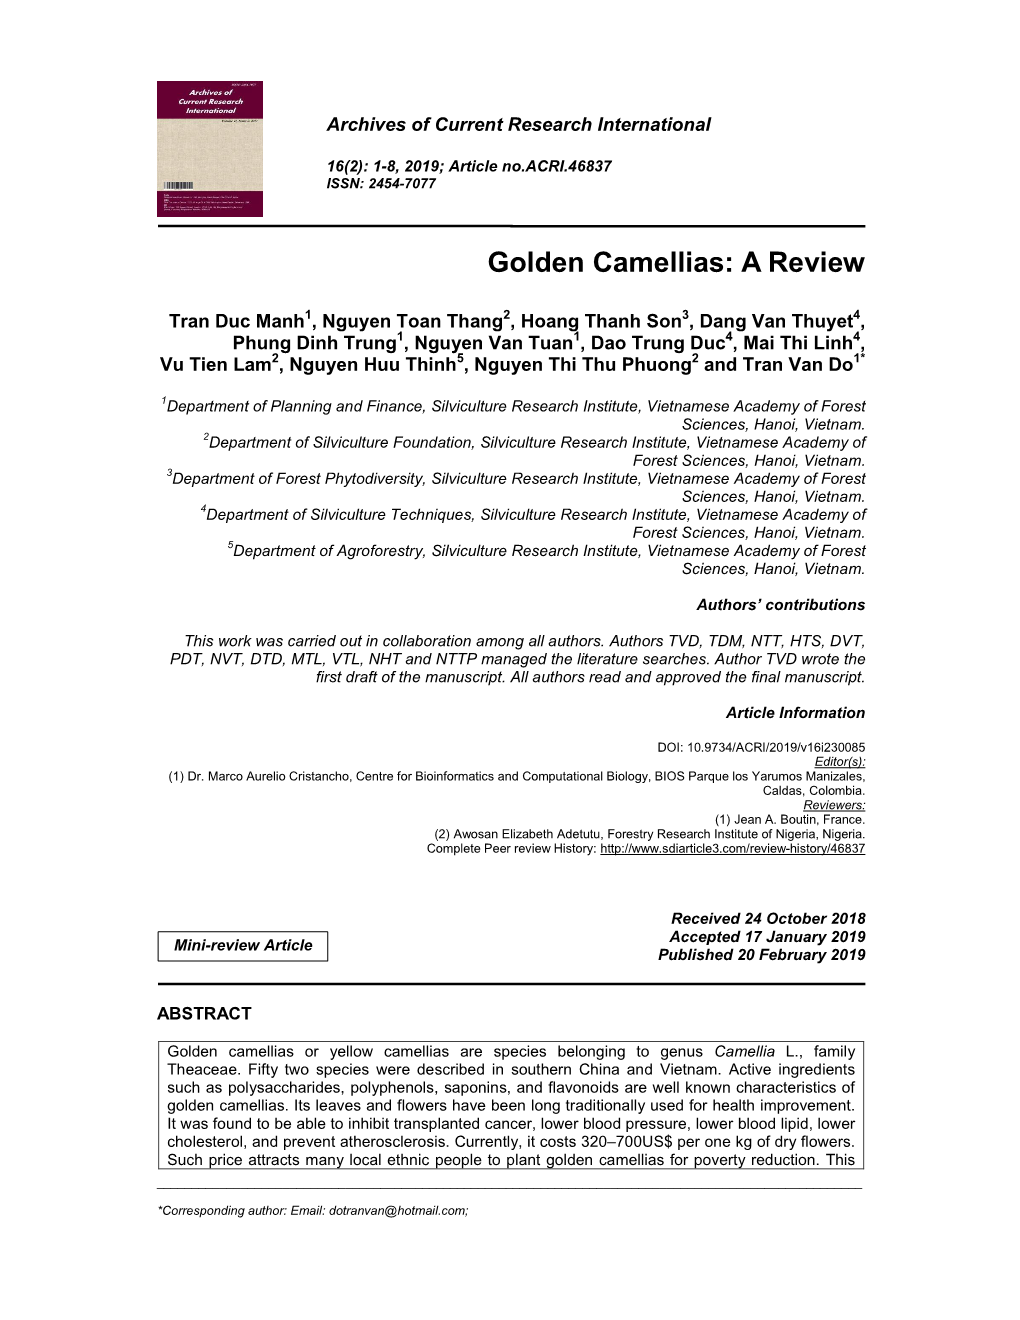 Golden Camellias: a Review